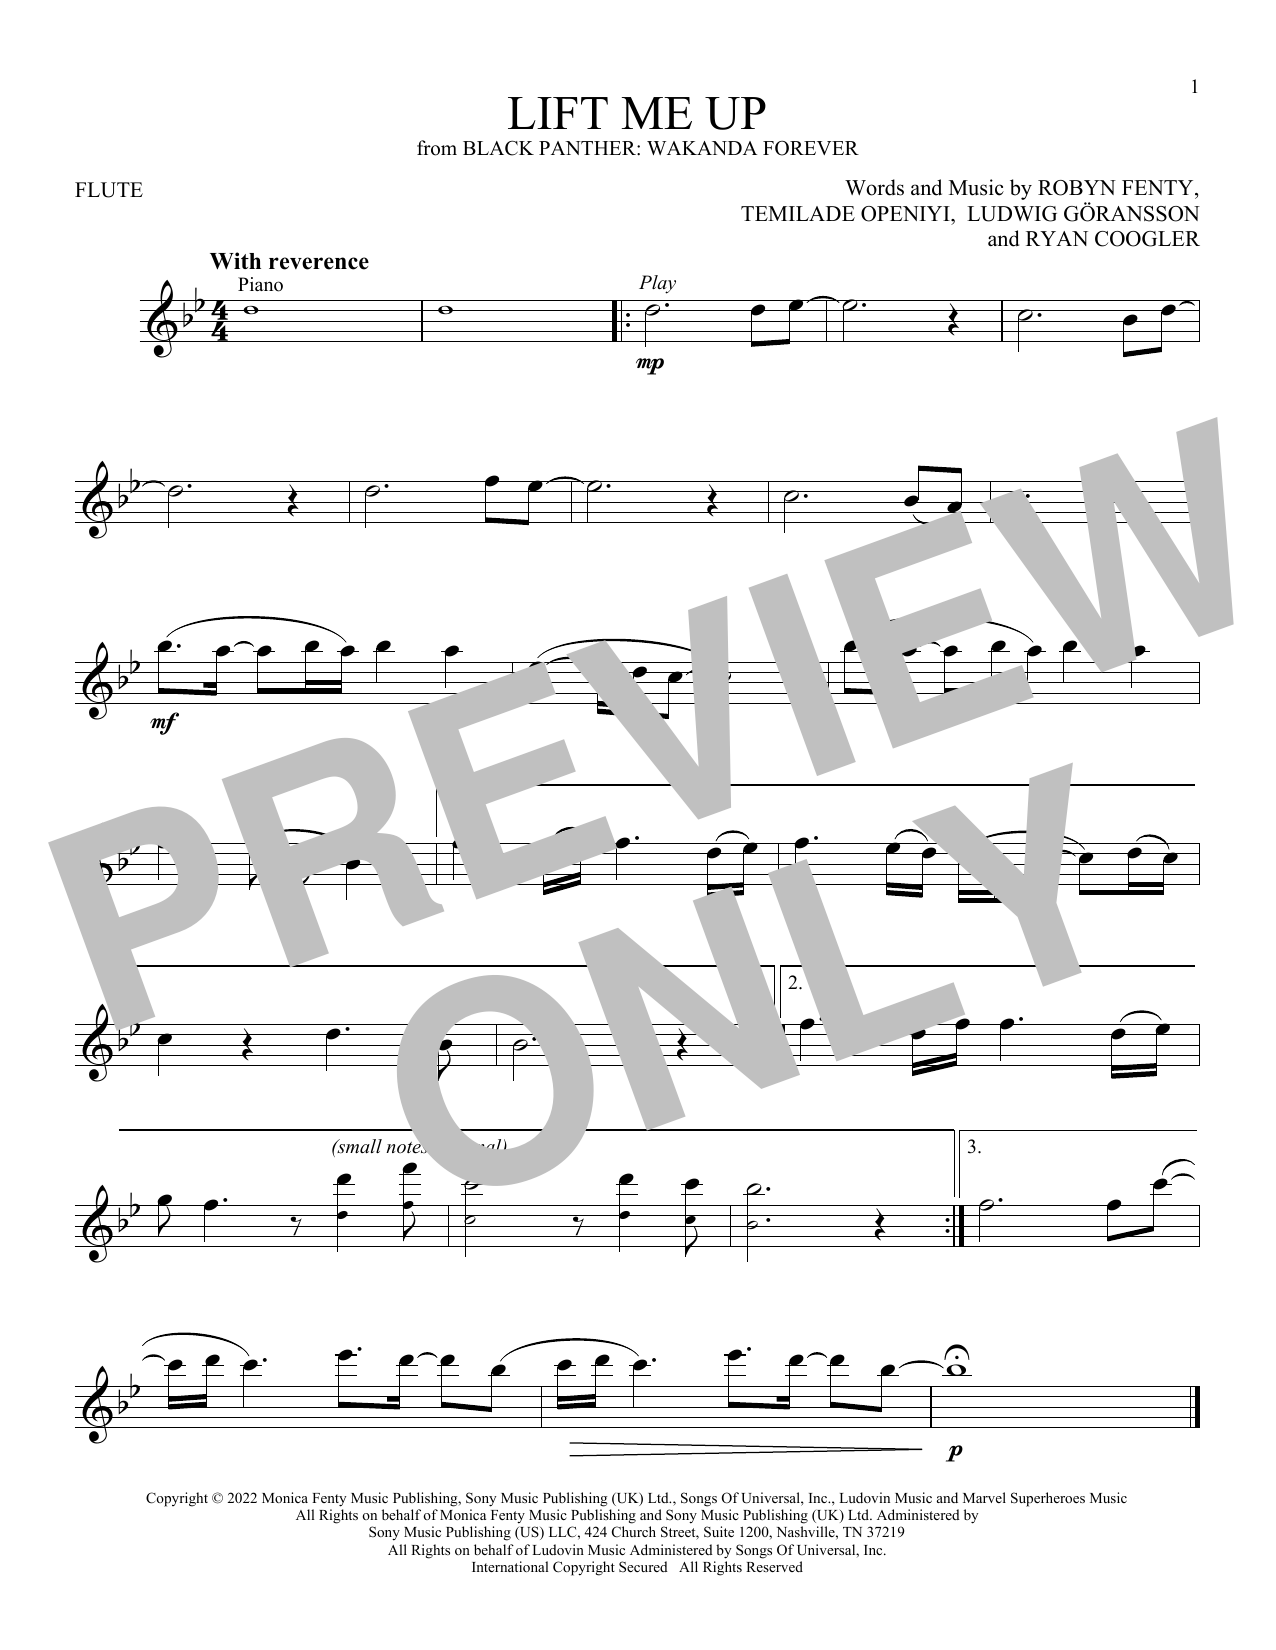 Rihanna Lift Me Up (from Black Panther: Wakanda Forever) sheet music notes printable PDF score